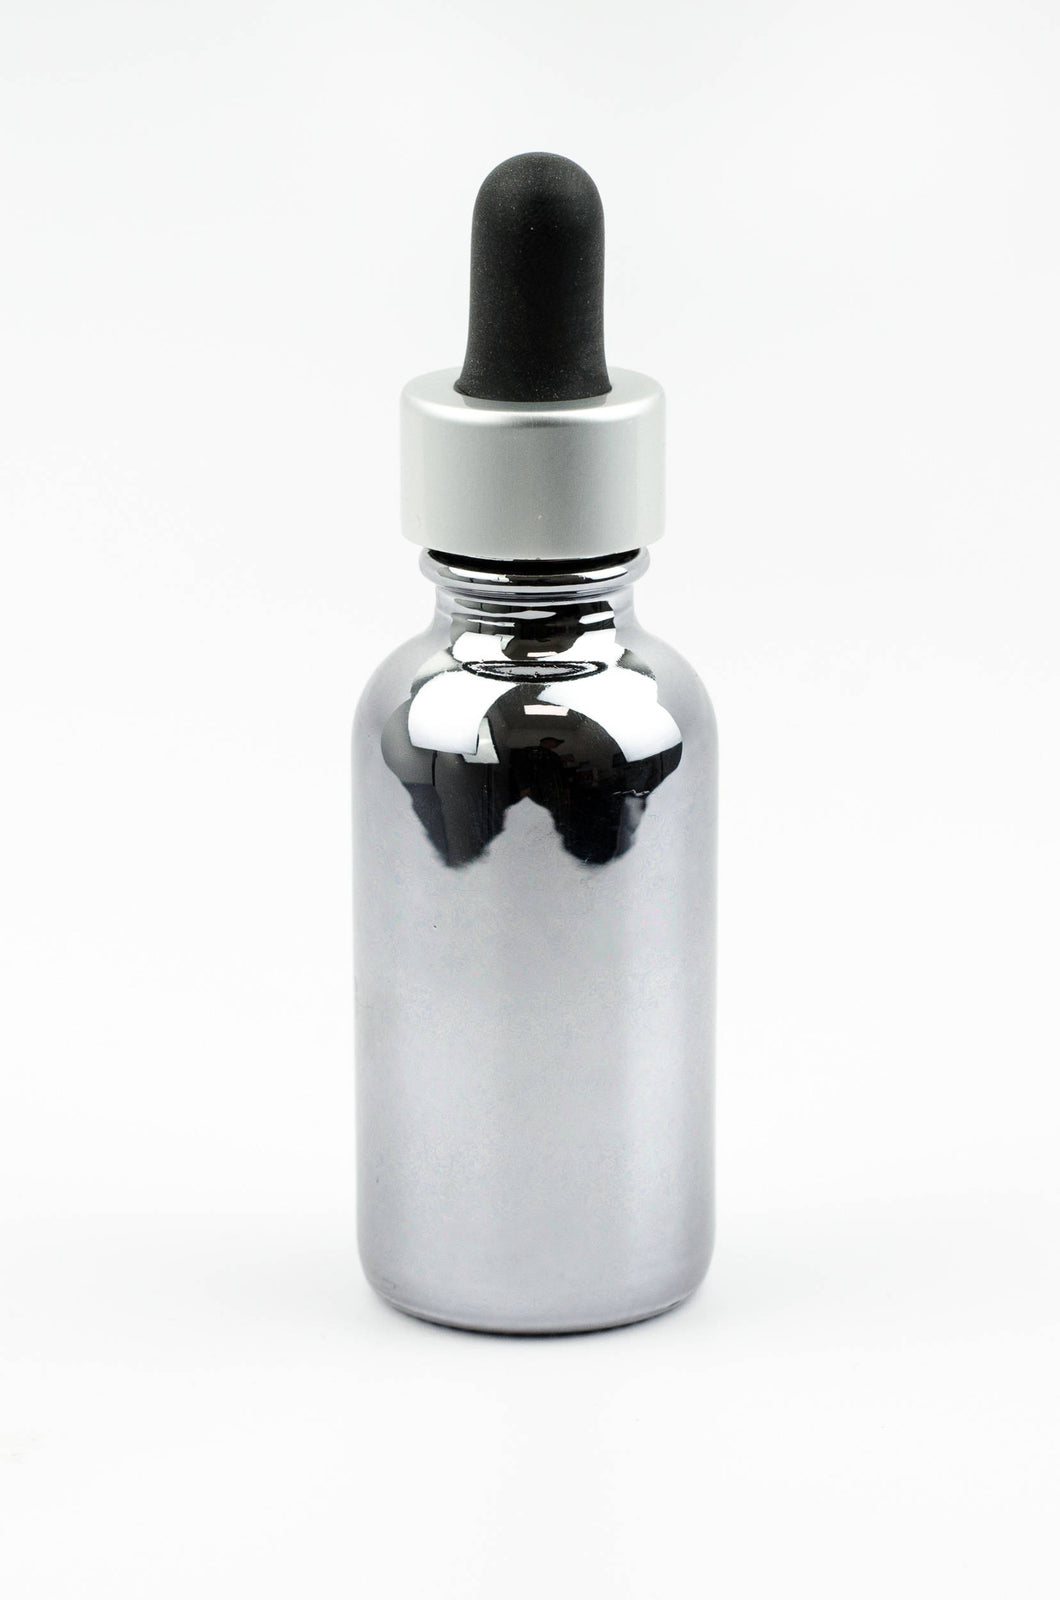 6 GUNMETAL 30ml Glass Bottles w/ Metallic Silver Glass Dropper Pipette 1 Oz UPSCALE LUXURY Cosmetic Skincare Packaging, Serum Essential Oil